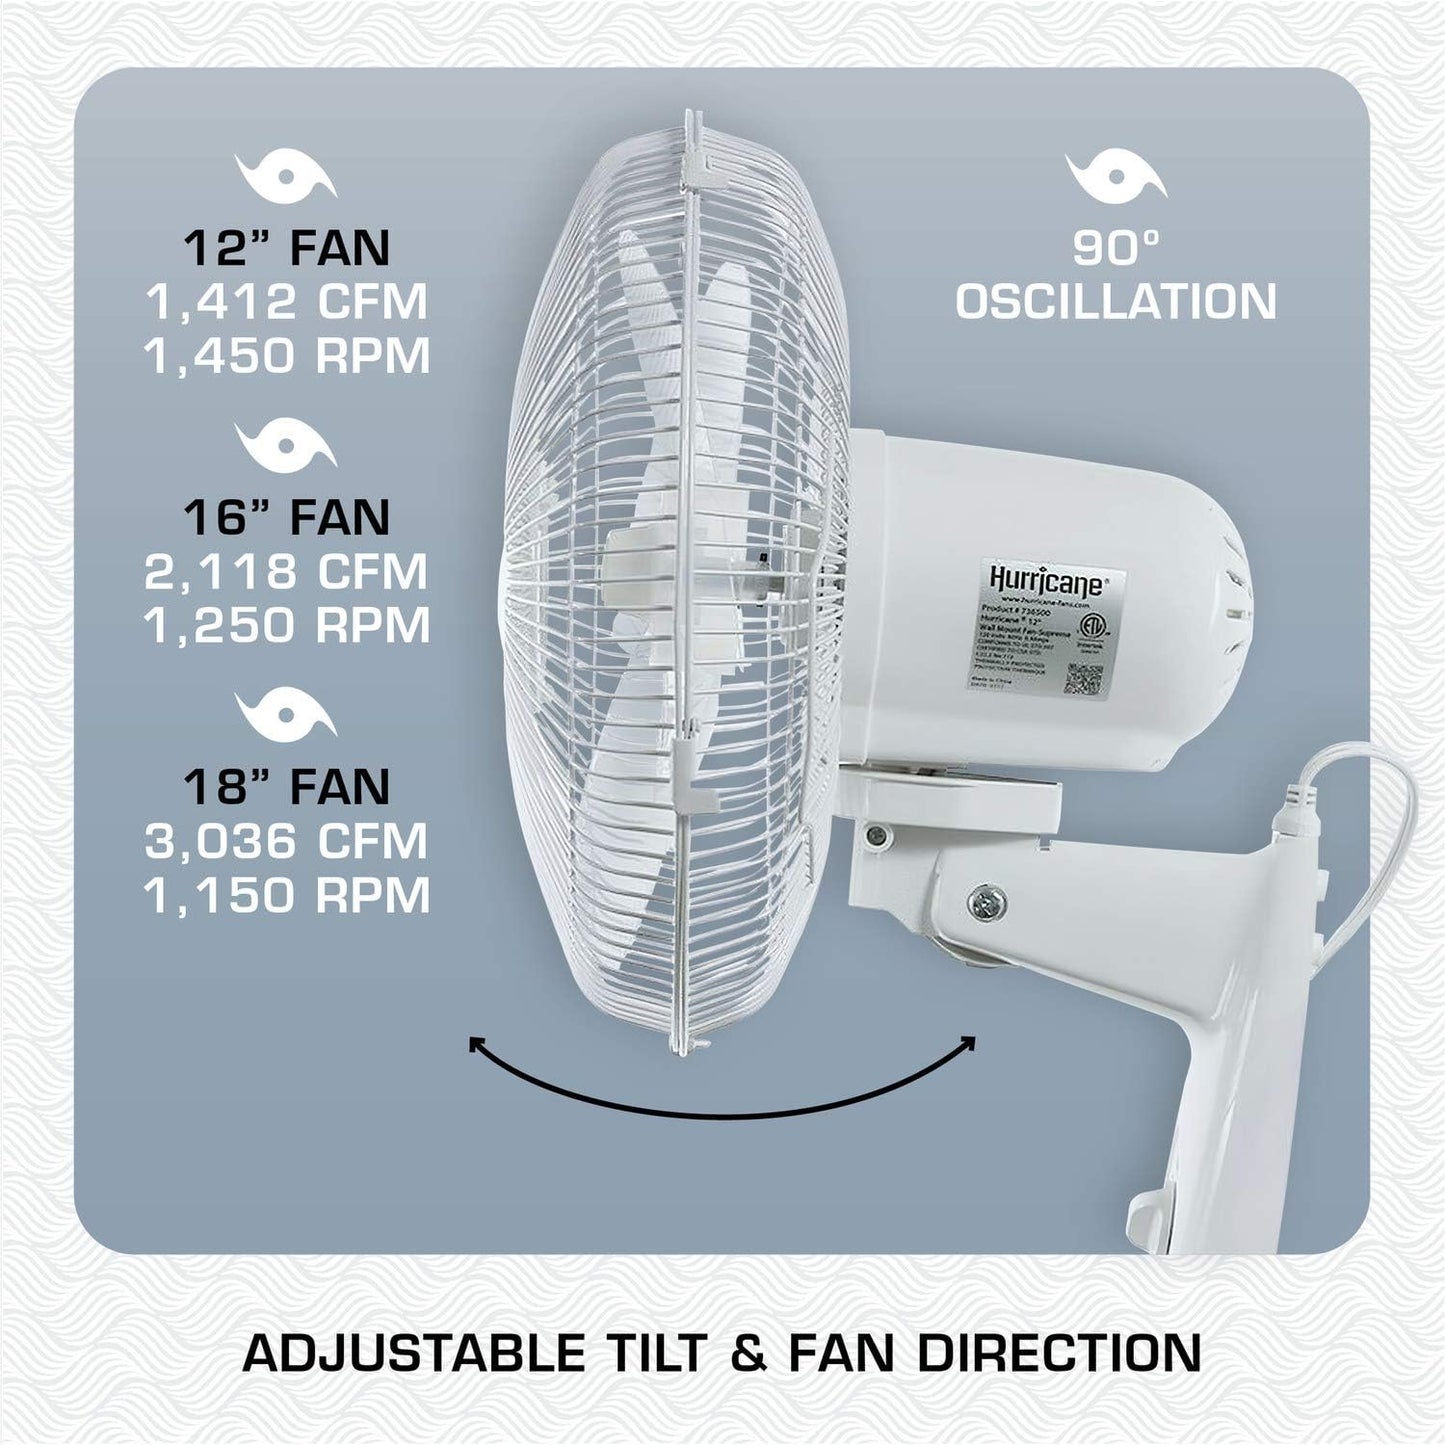 Hurricane Wall Mount Fan - 16 Inch, Supreme Series, Wall Fan with 90 Degree Oscillation, 3 Speed Settings, Adjustable Tilt - ETL Listed, White